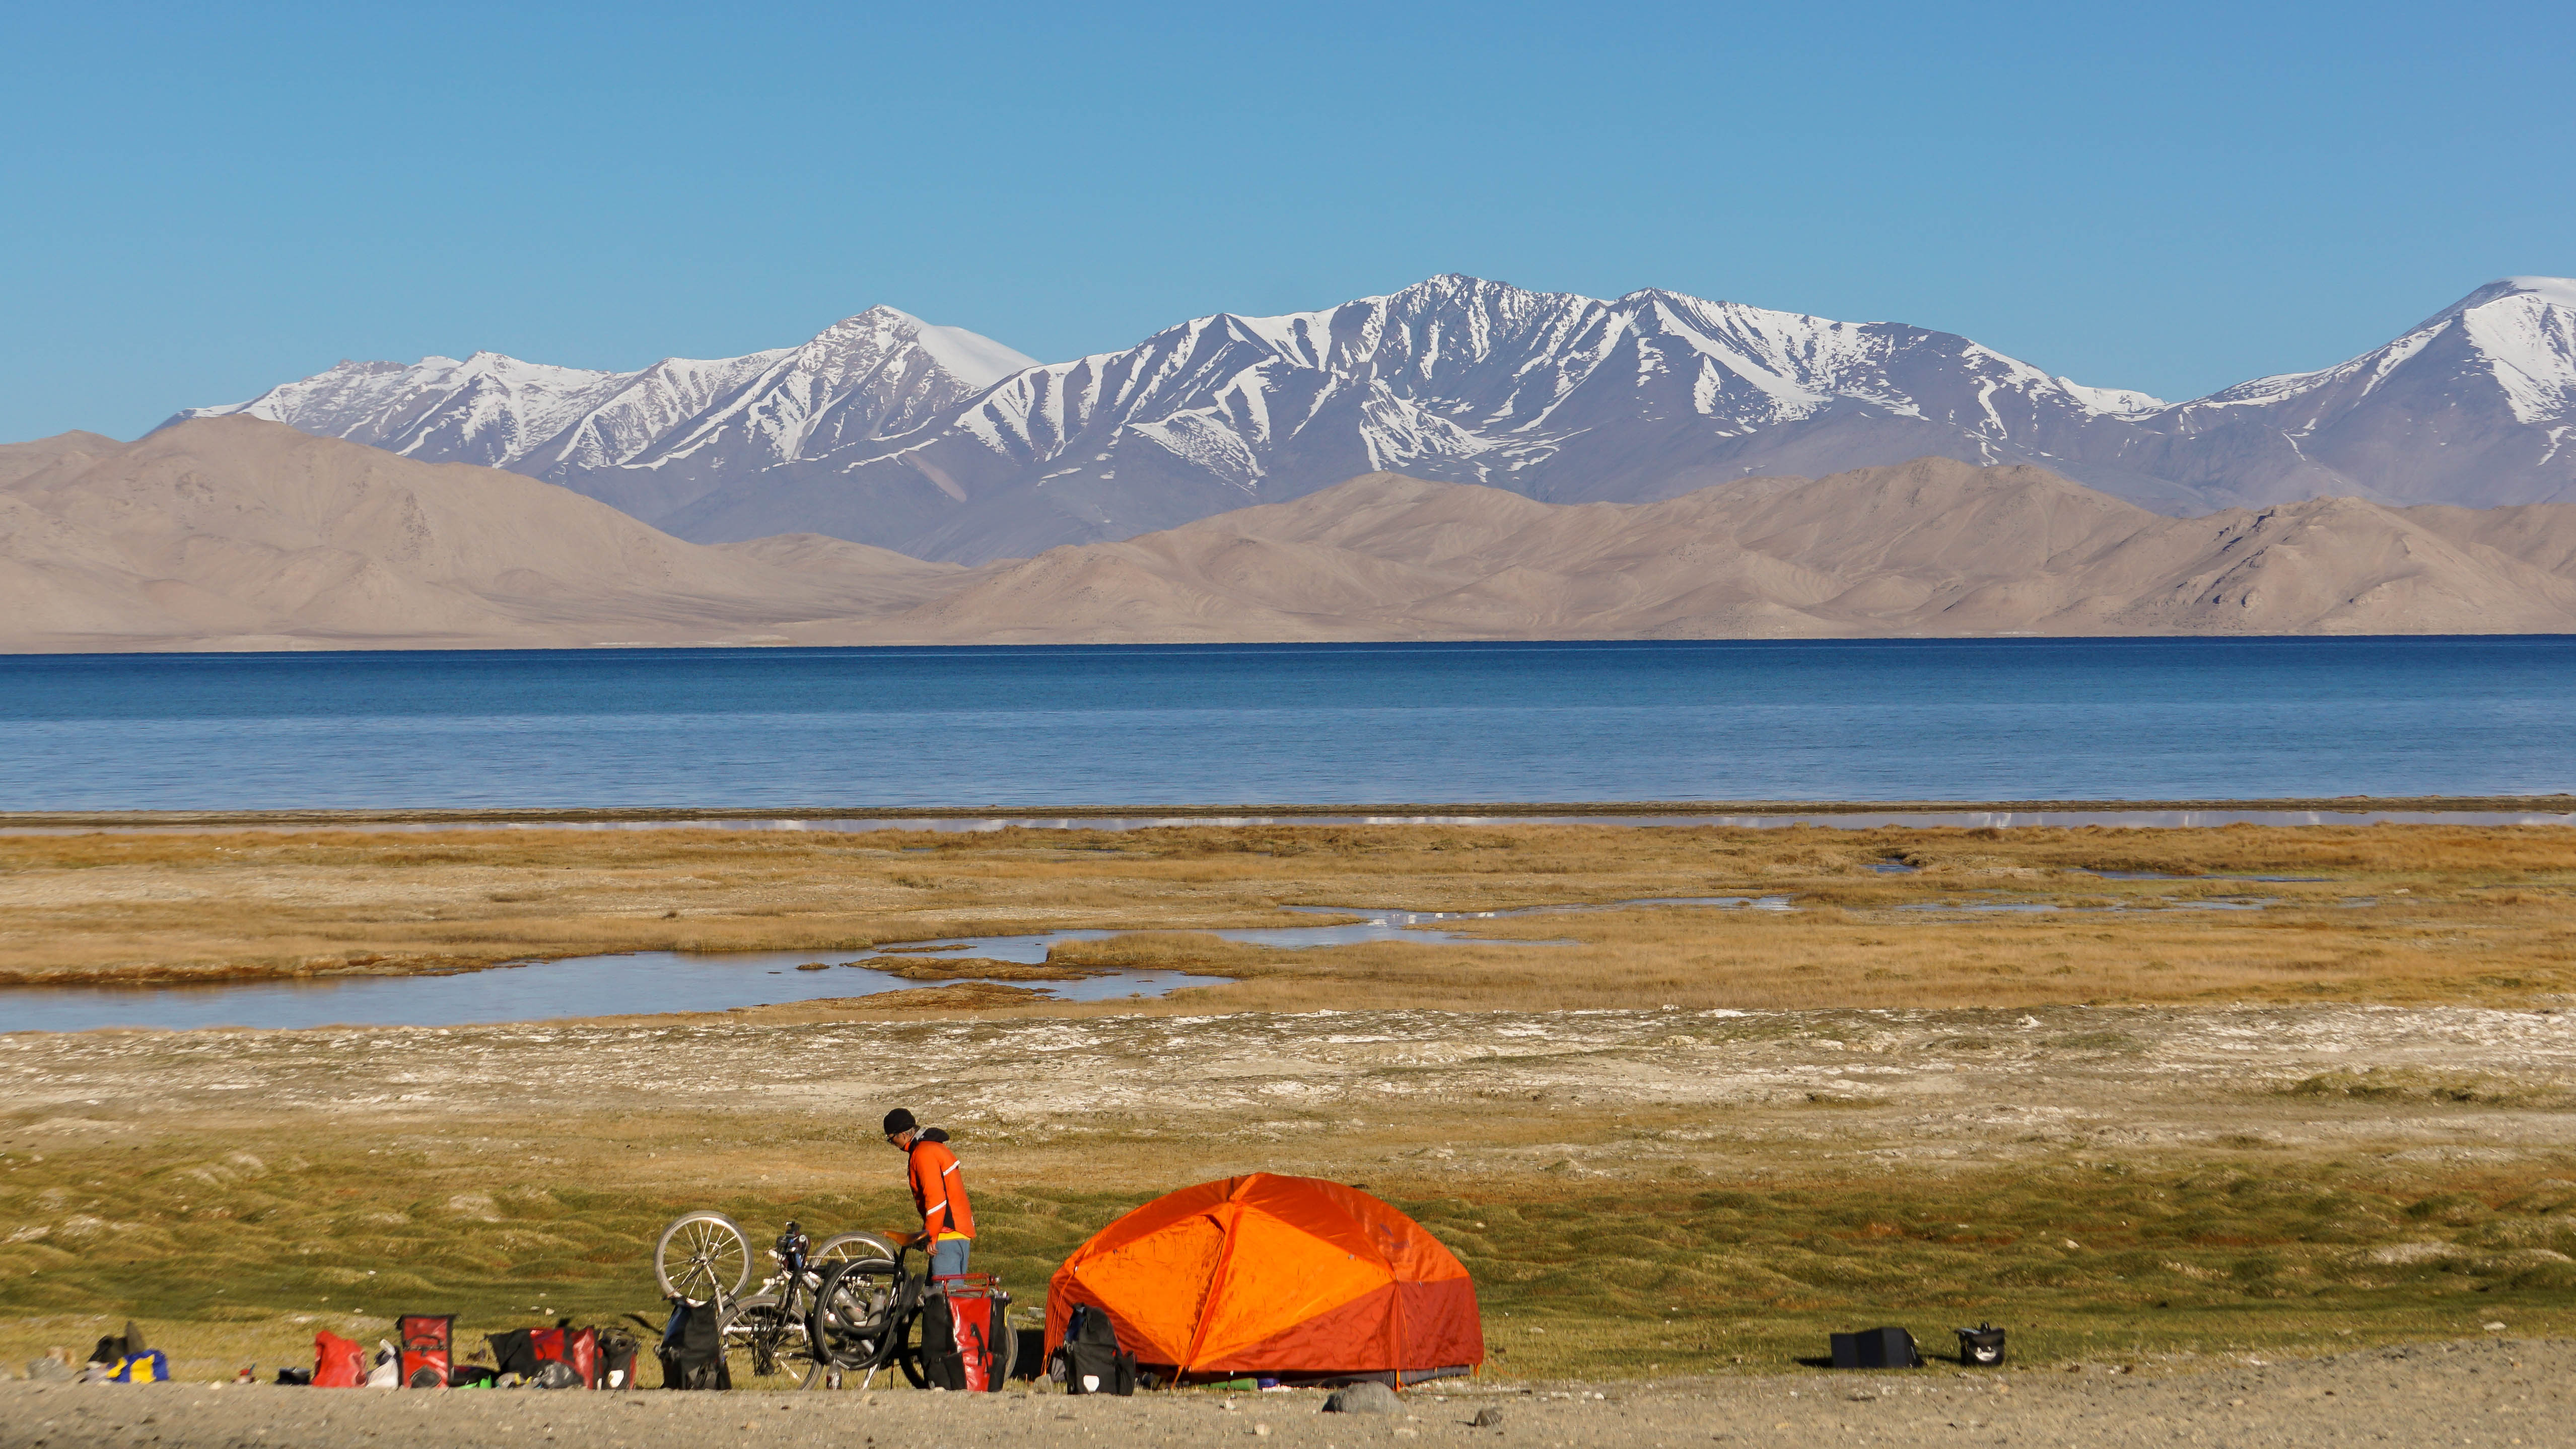 Camping on the shores of Lake Karakul, Tajikistan.